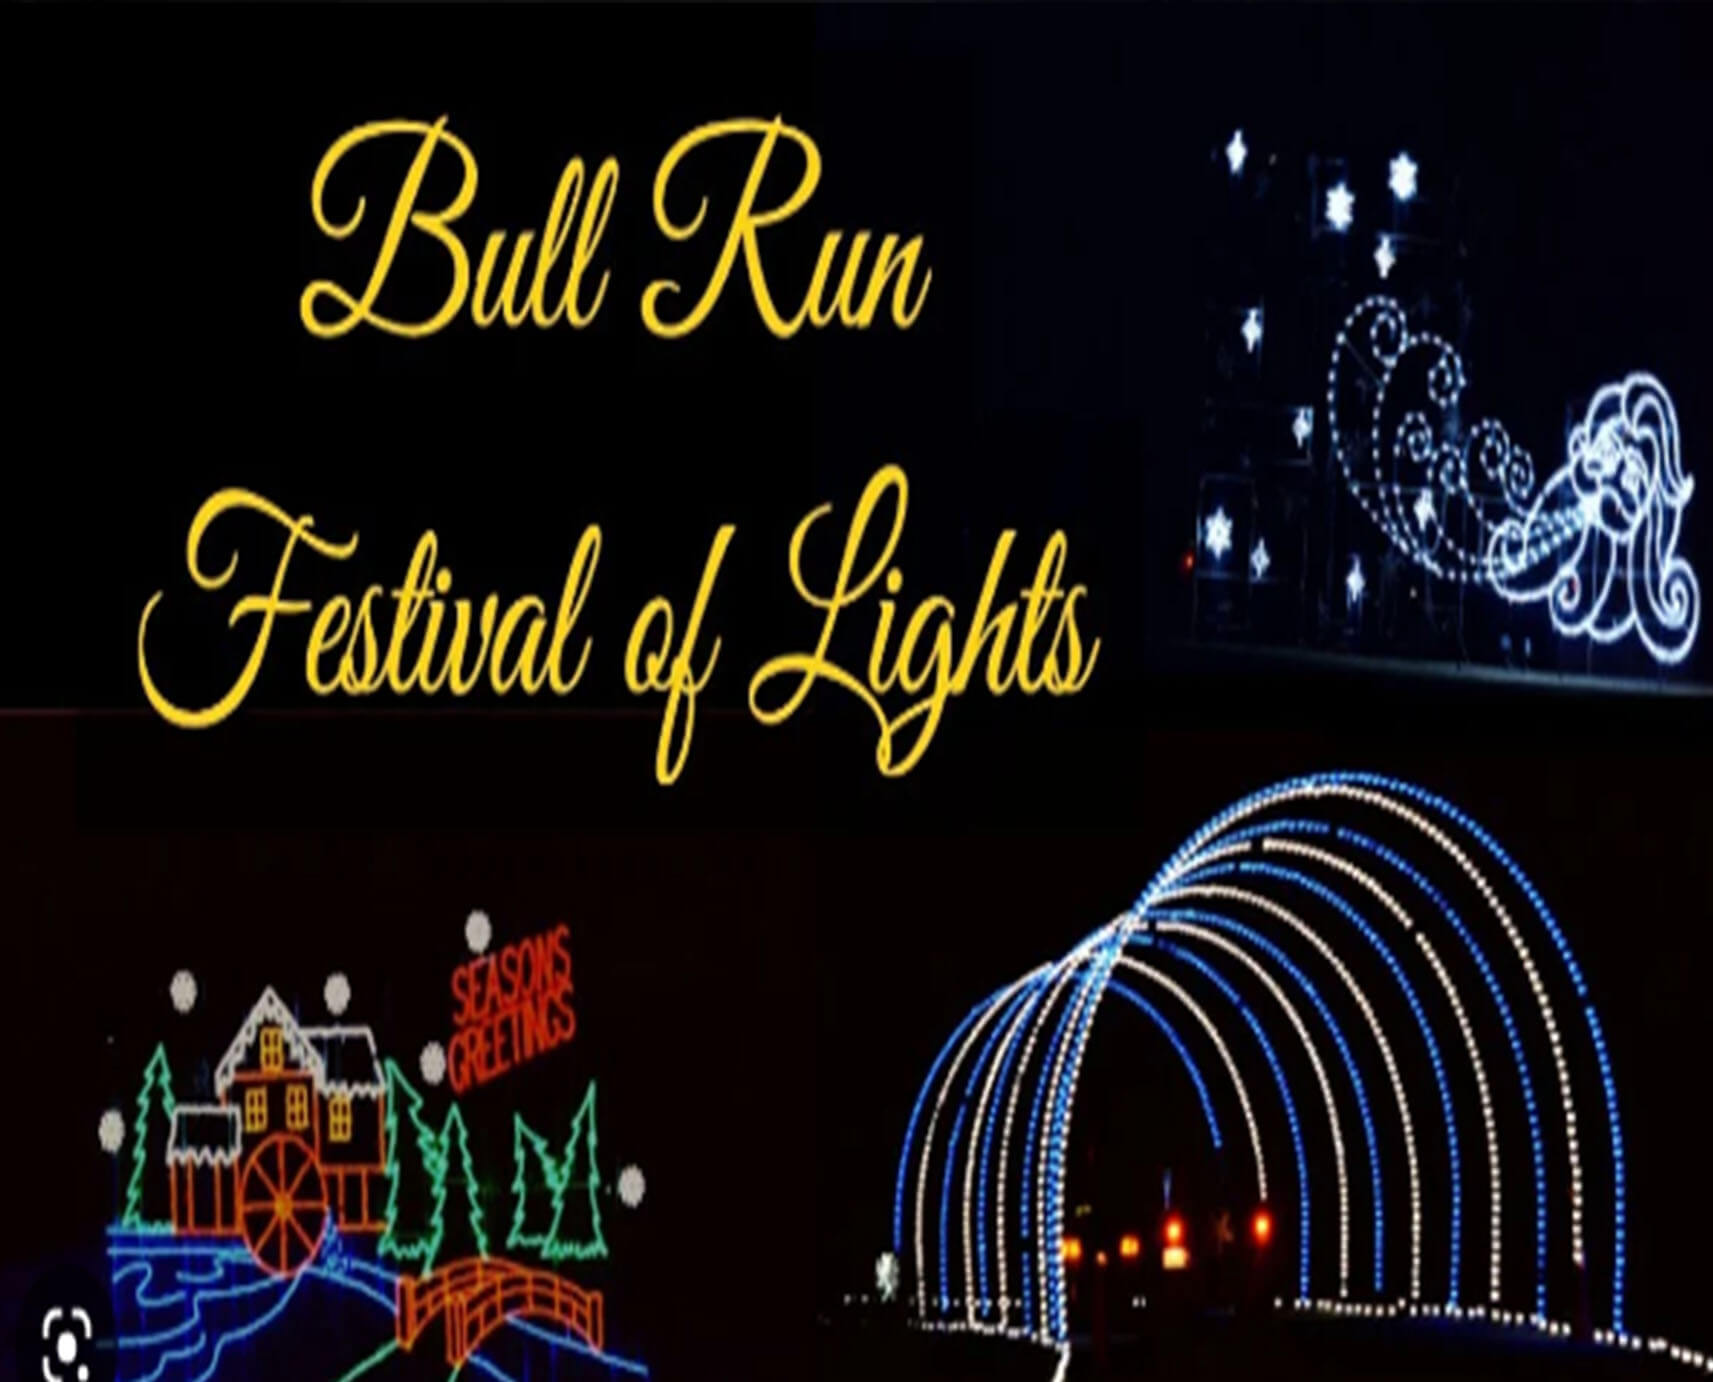 About 2023 Bull Run Festival of Lights